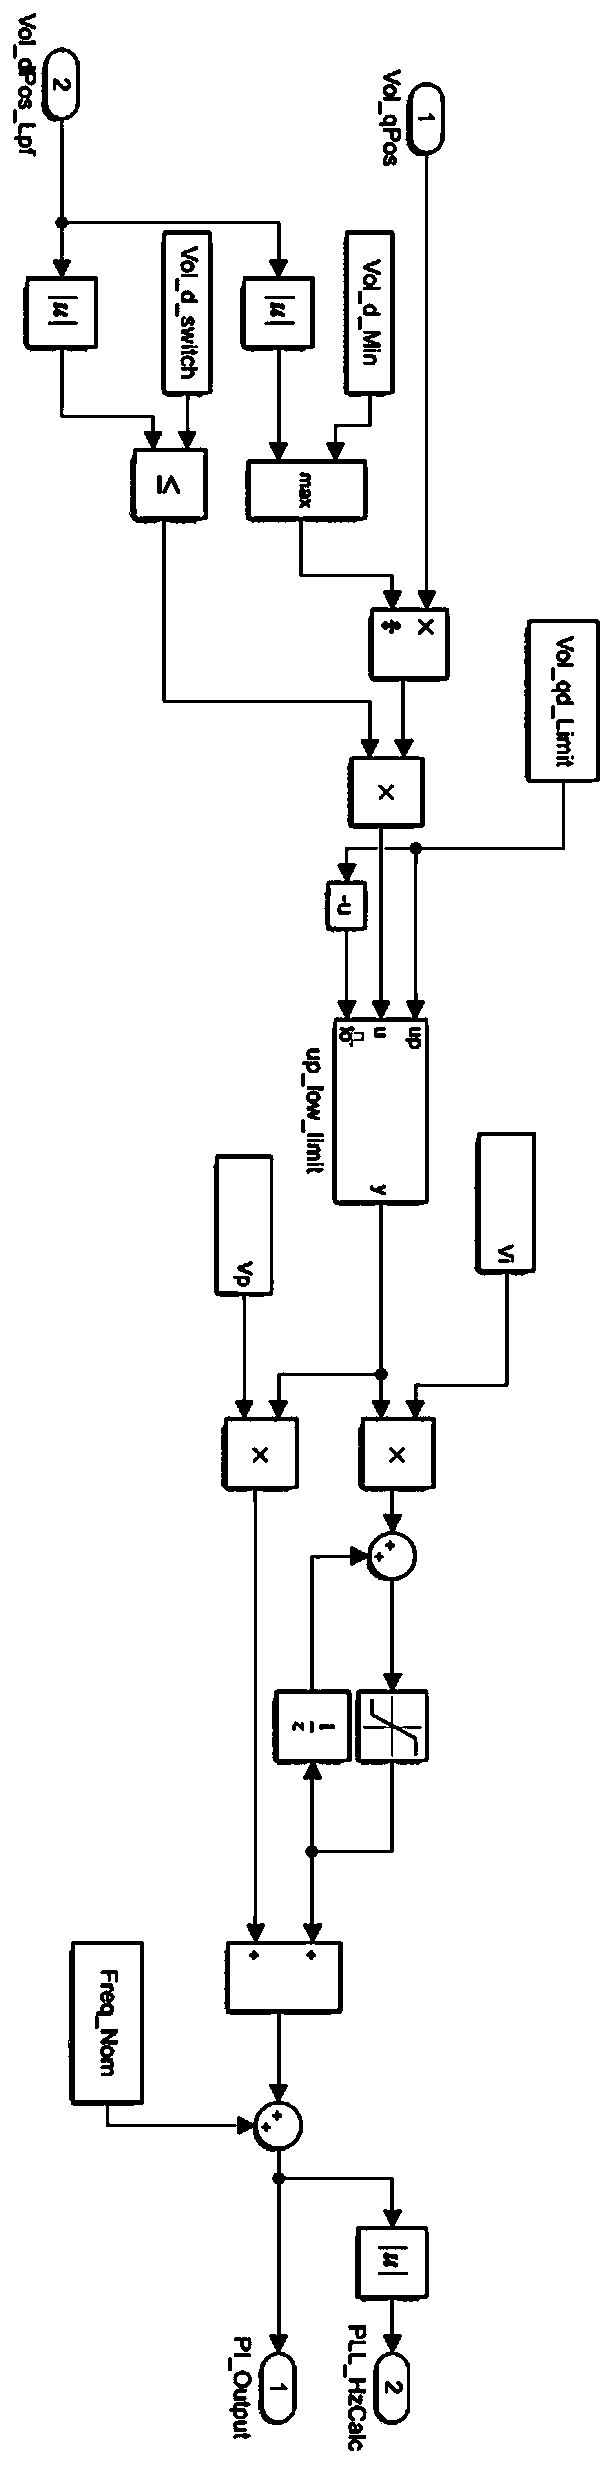 Phase-locked loop control method and system based on dynamic voltage restorer